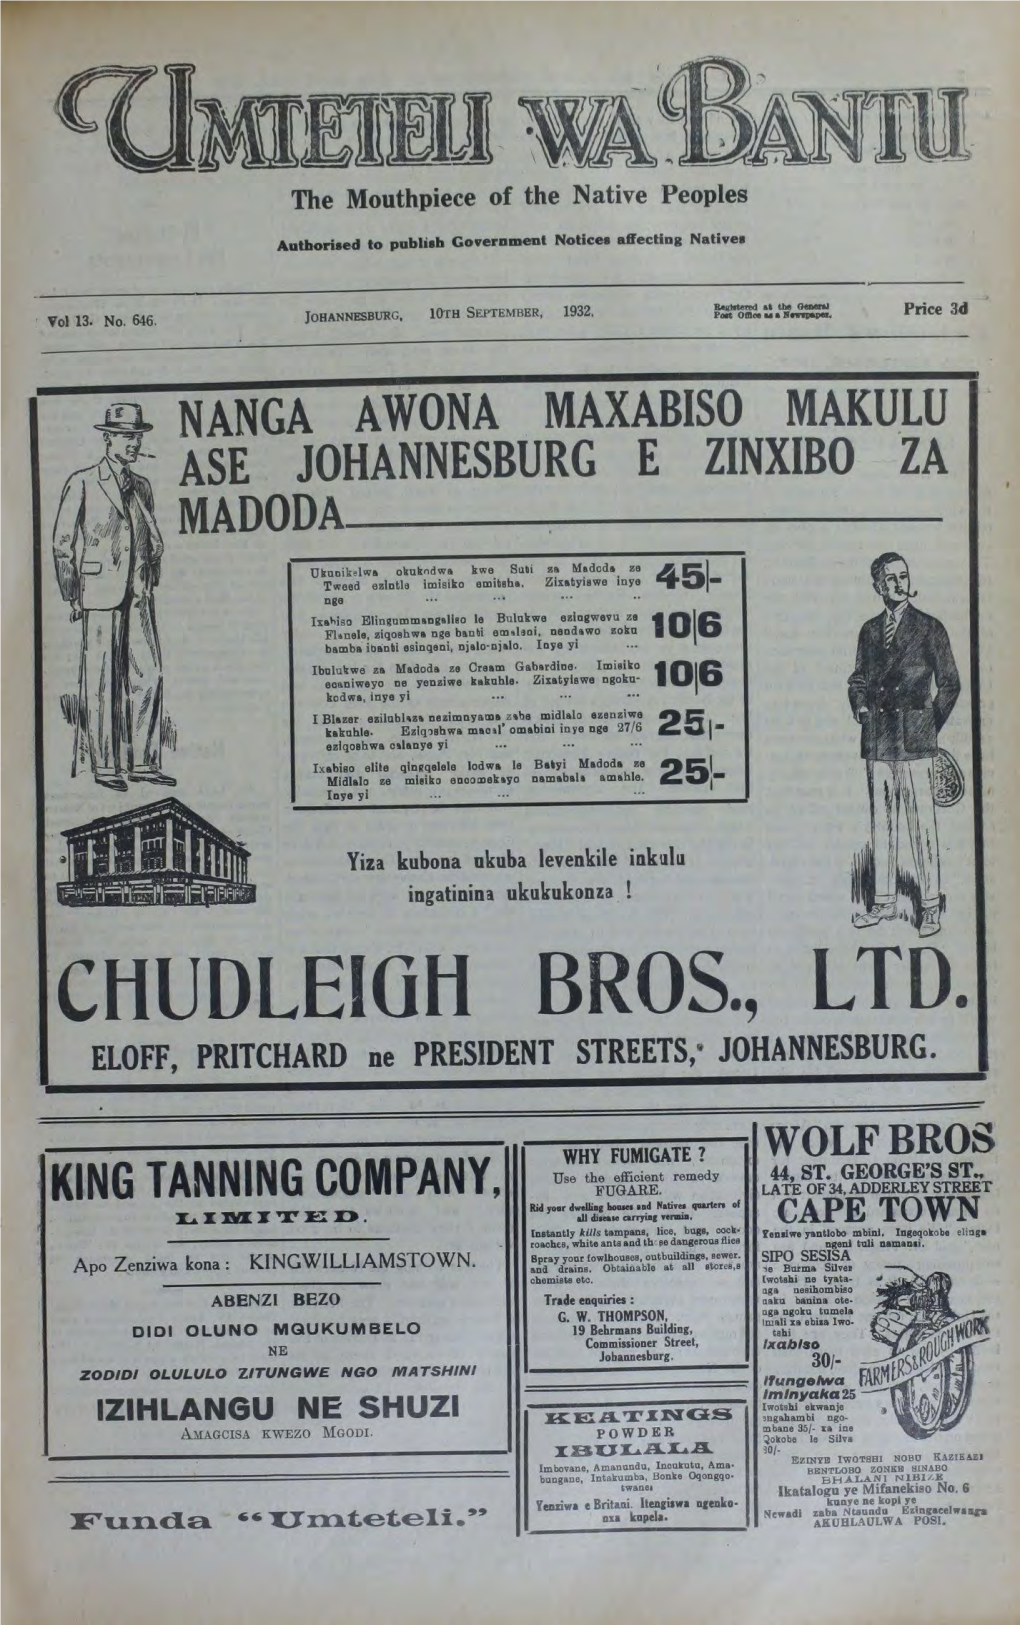 Makulu Zinxibo Za King Tanning Company